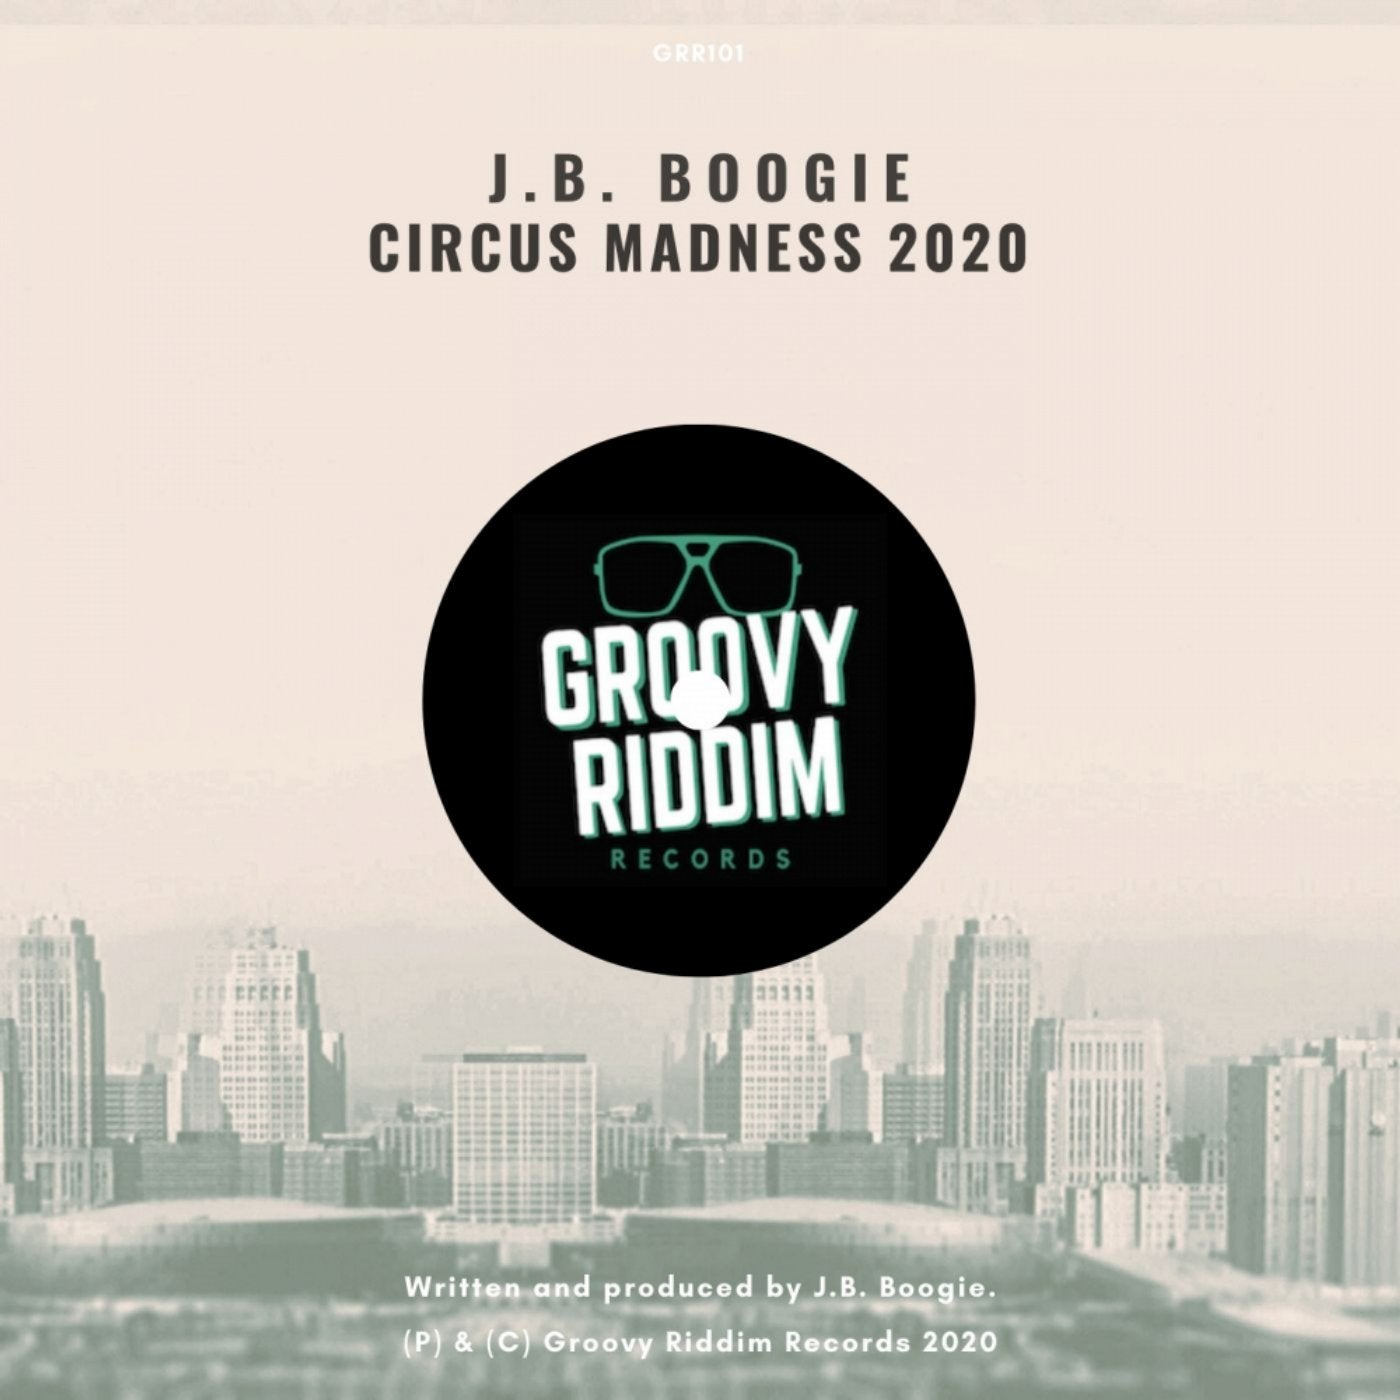 Circus Madness 2020